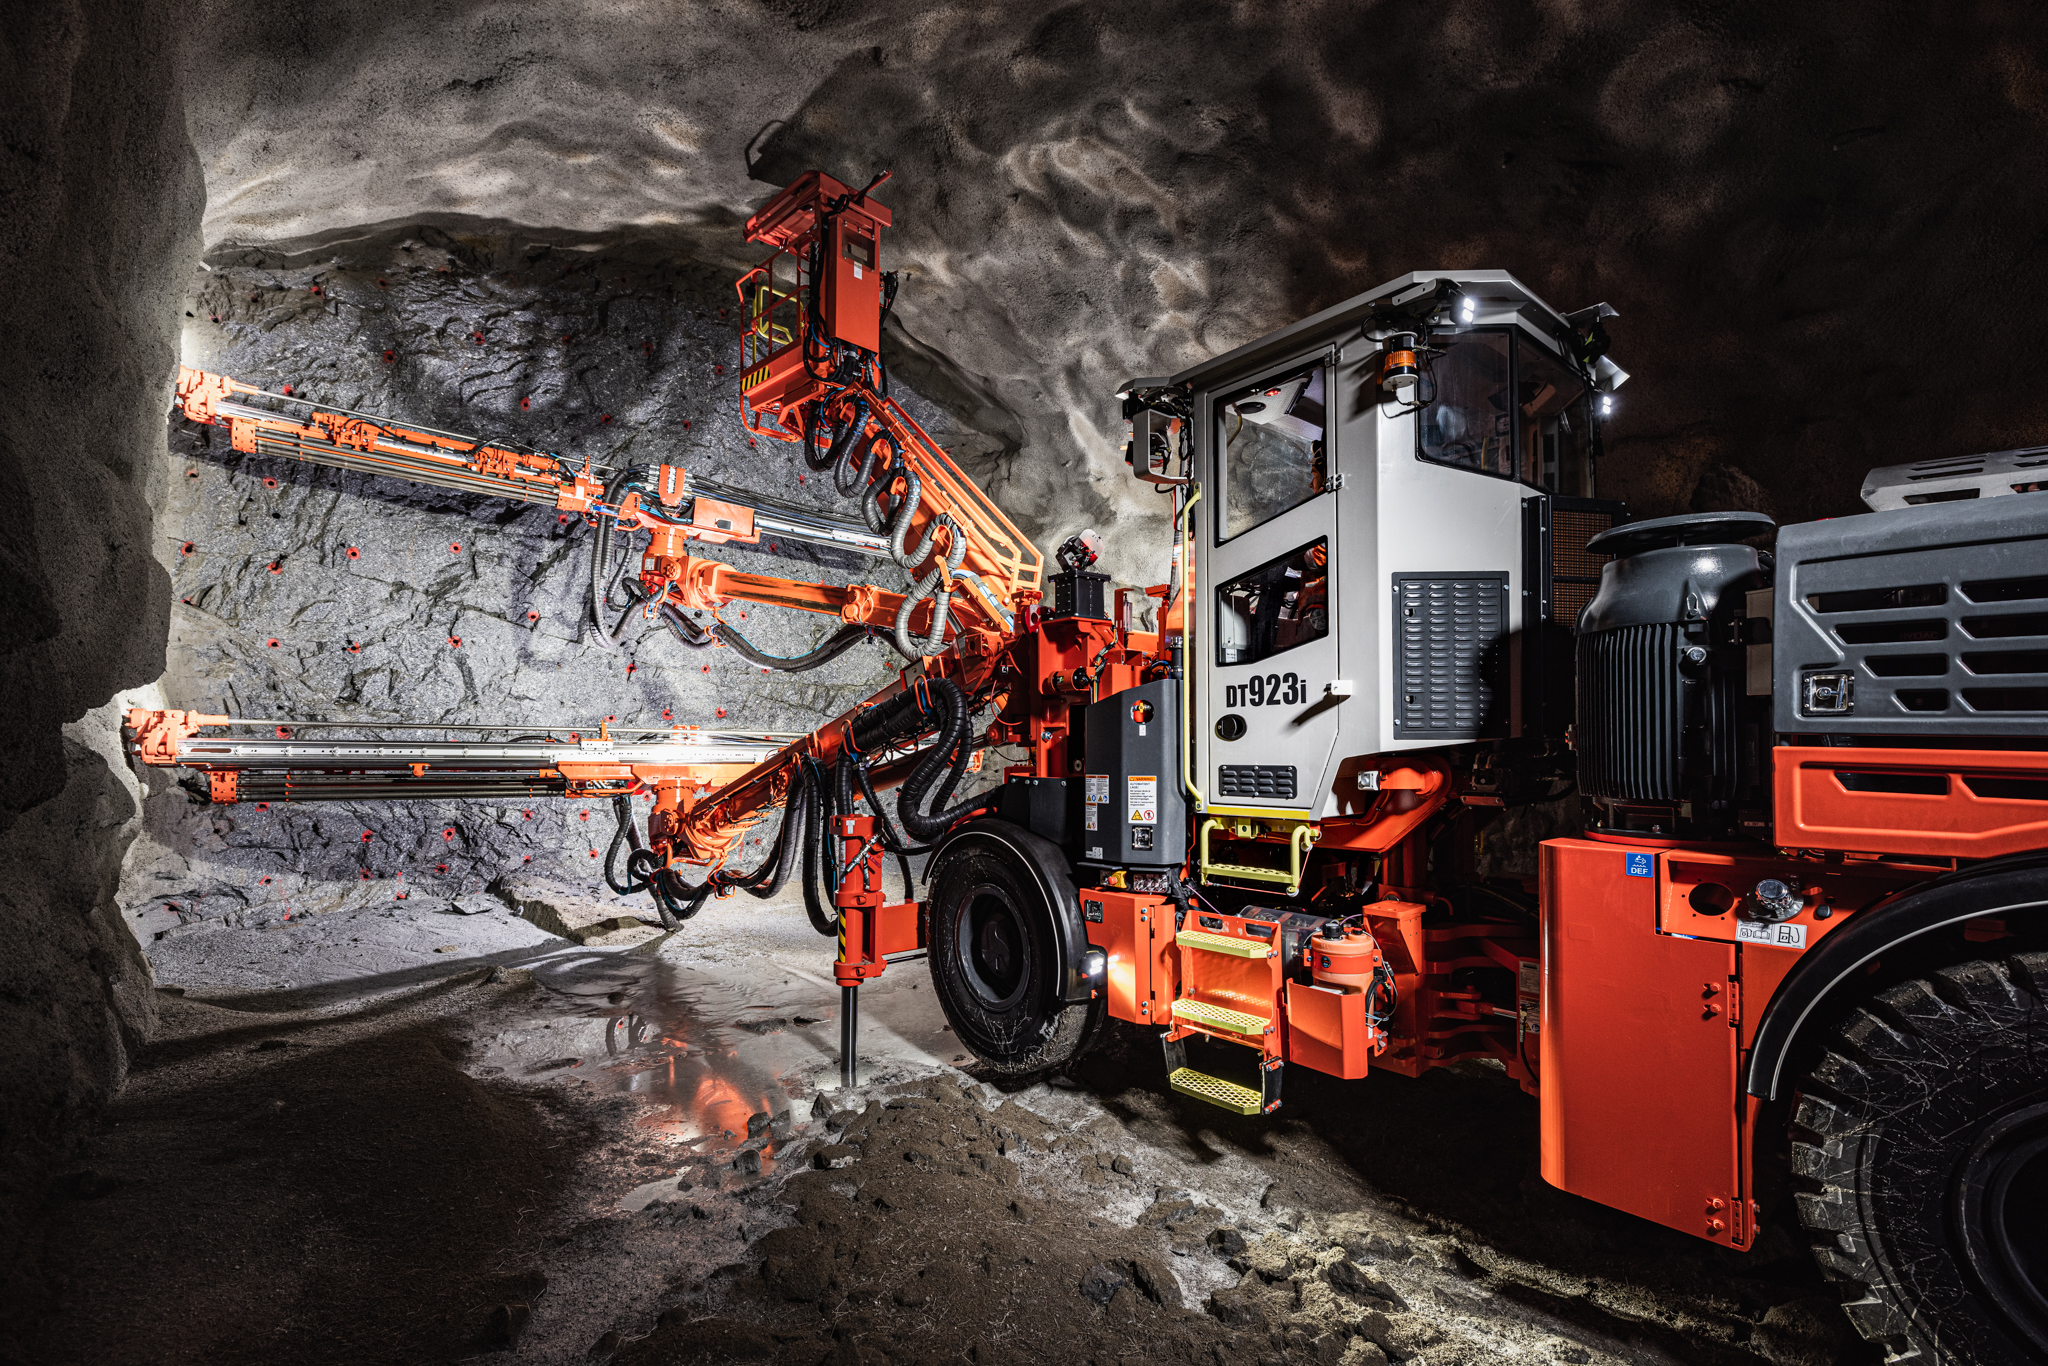 New Sandvik DT923i tunnelling jumbo improves accuracy, productivity -  International Mining